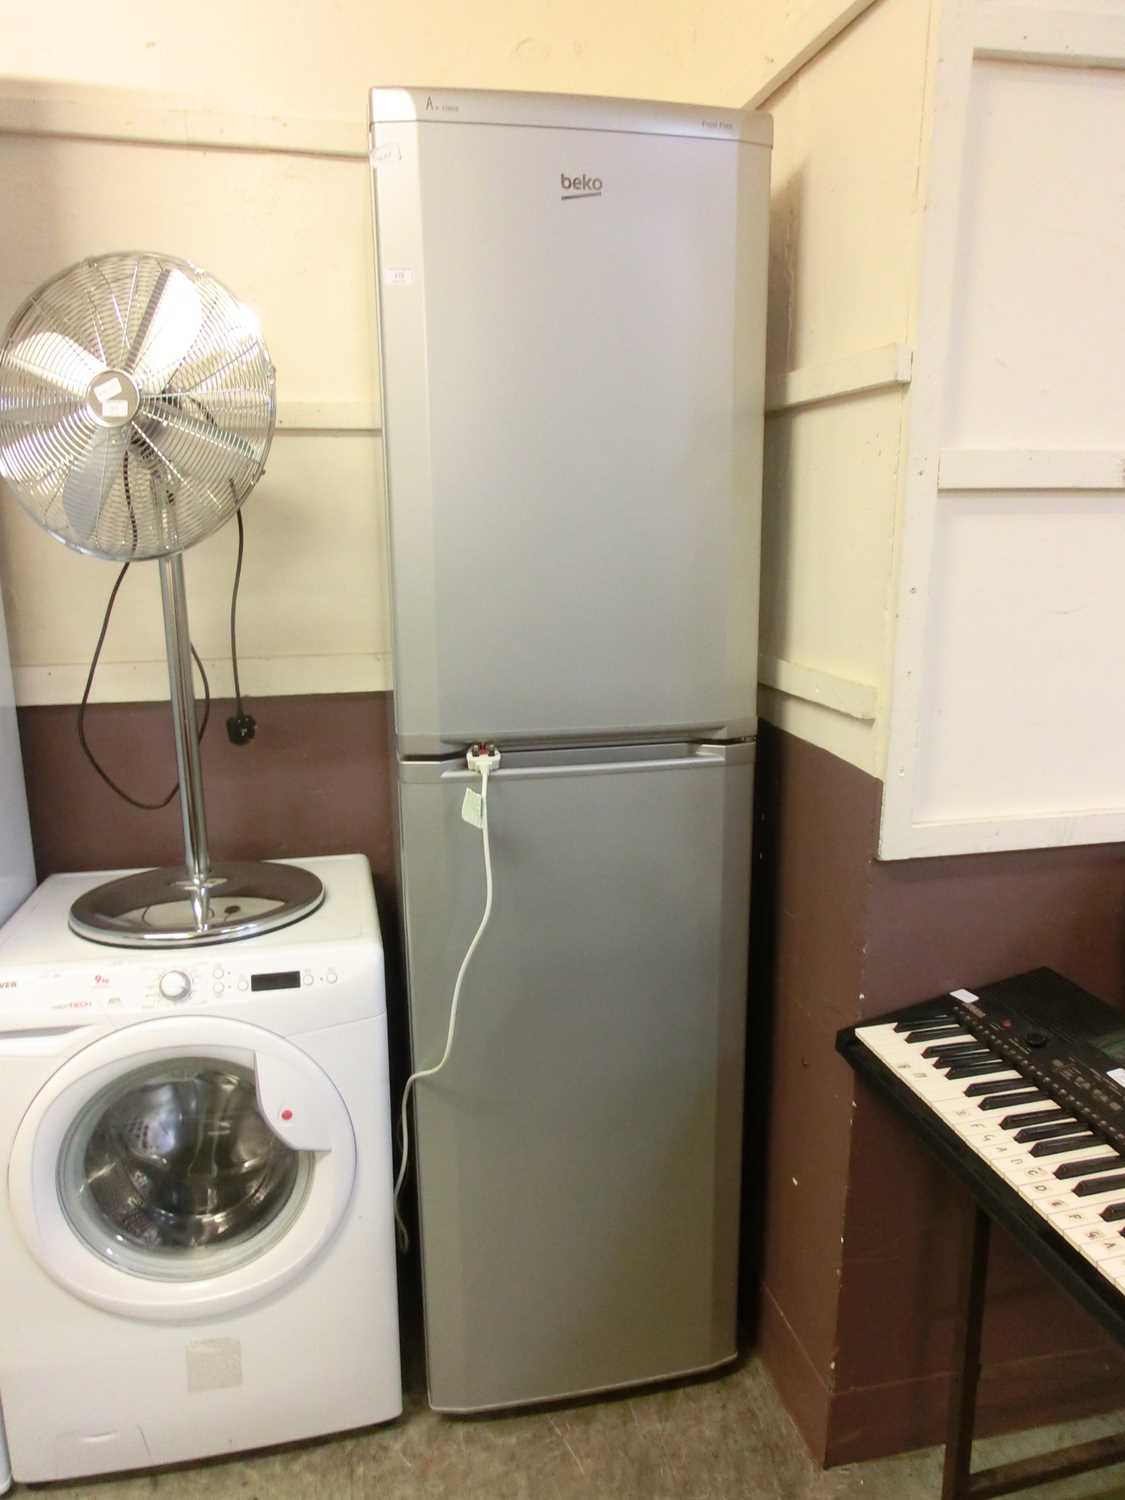 A grey Beko frost free A class fridge freezer